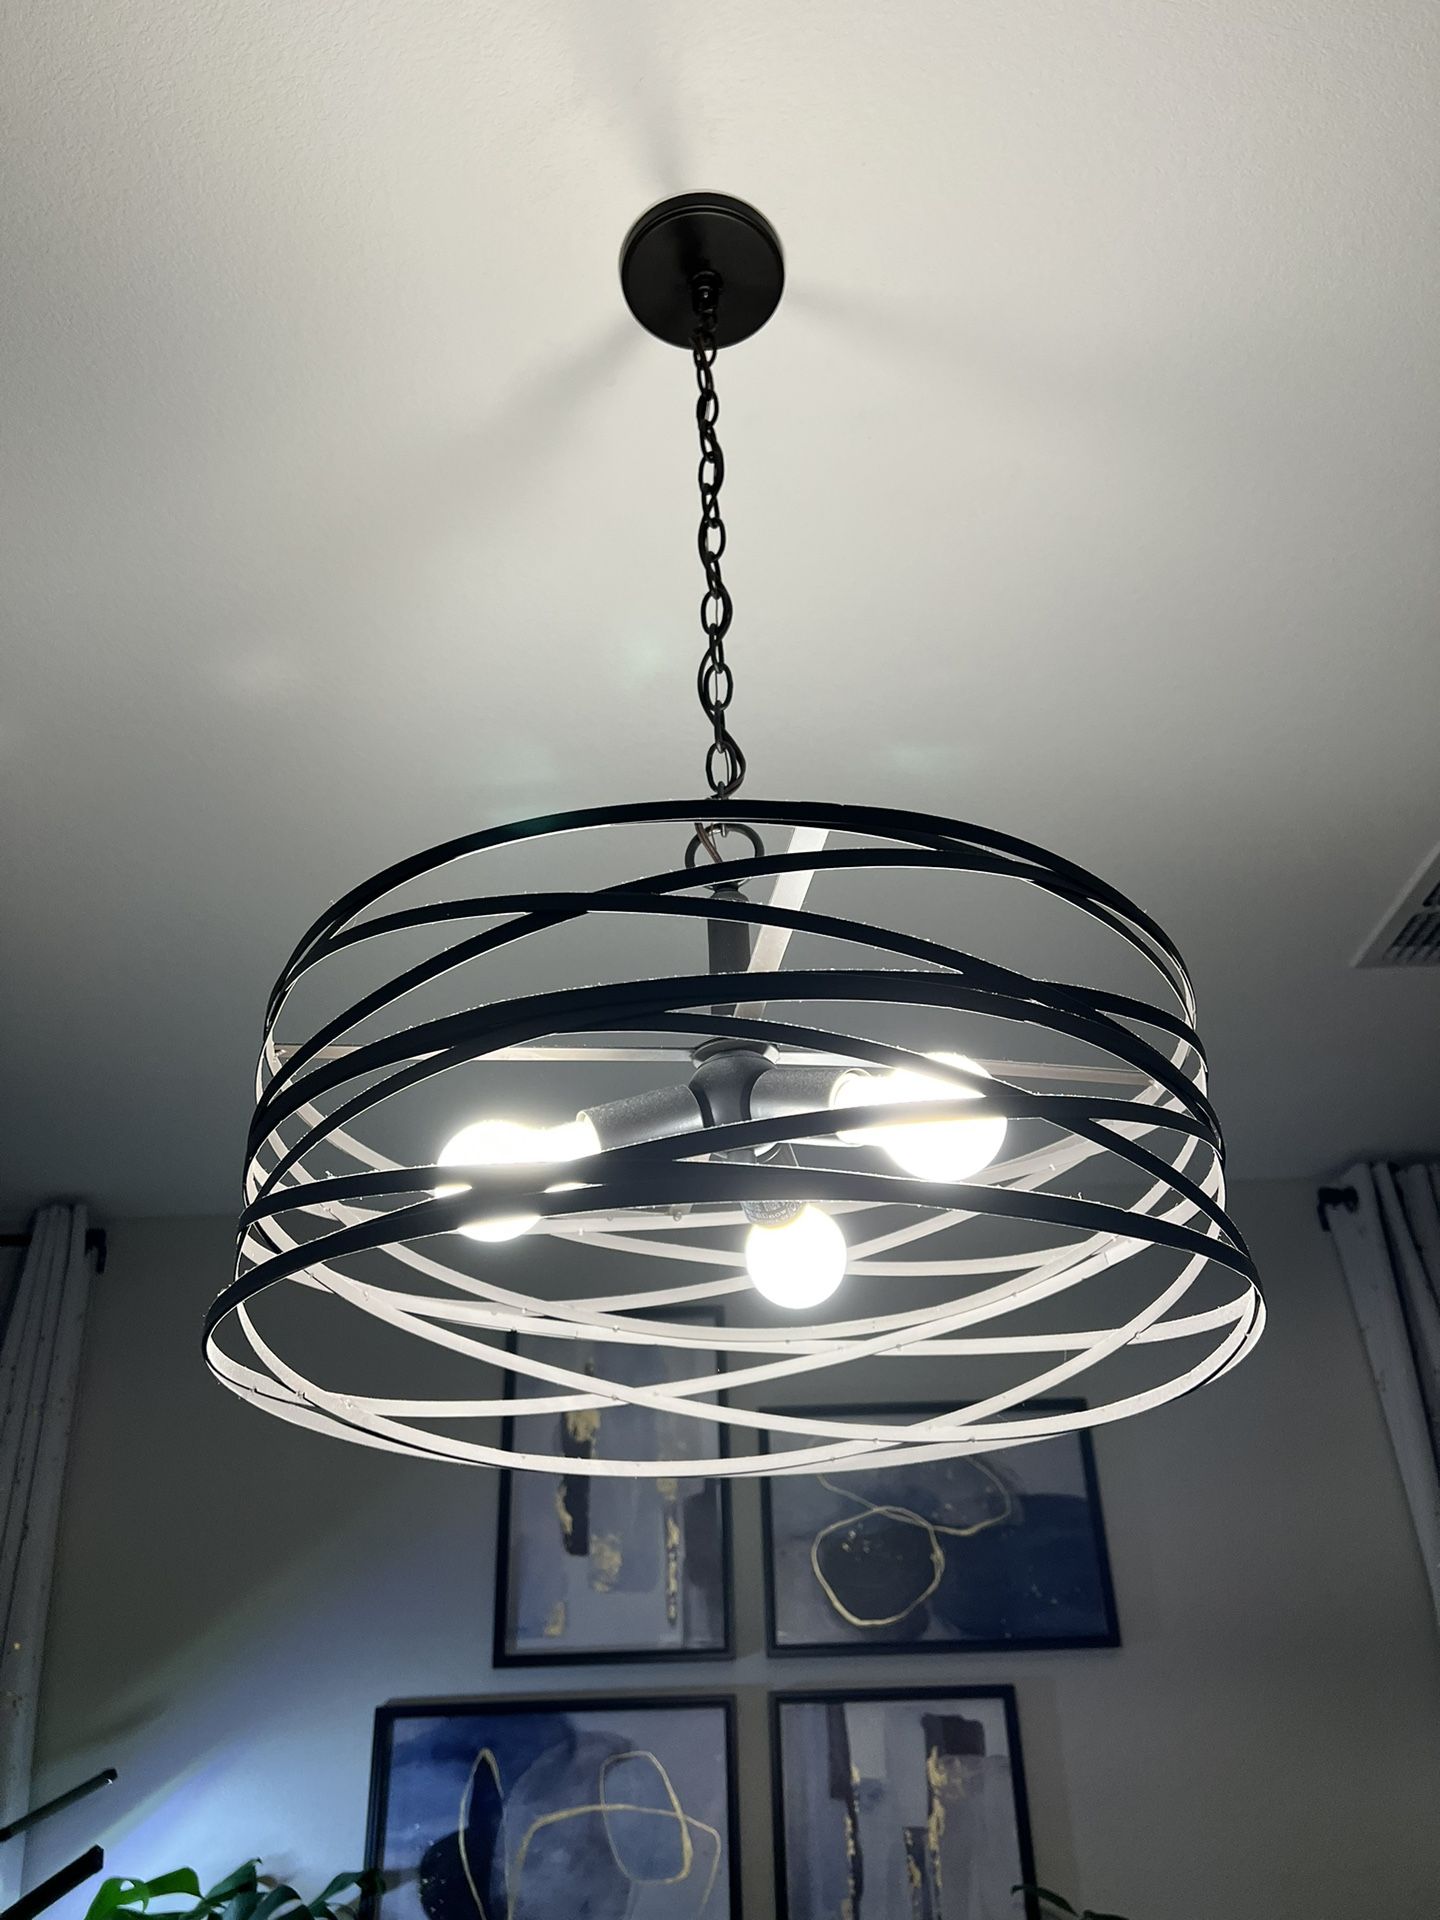 Allen + Roth Modern Ceiling Lamp / Chandelier Lowe’s Exclusive